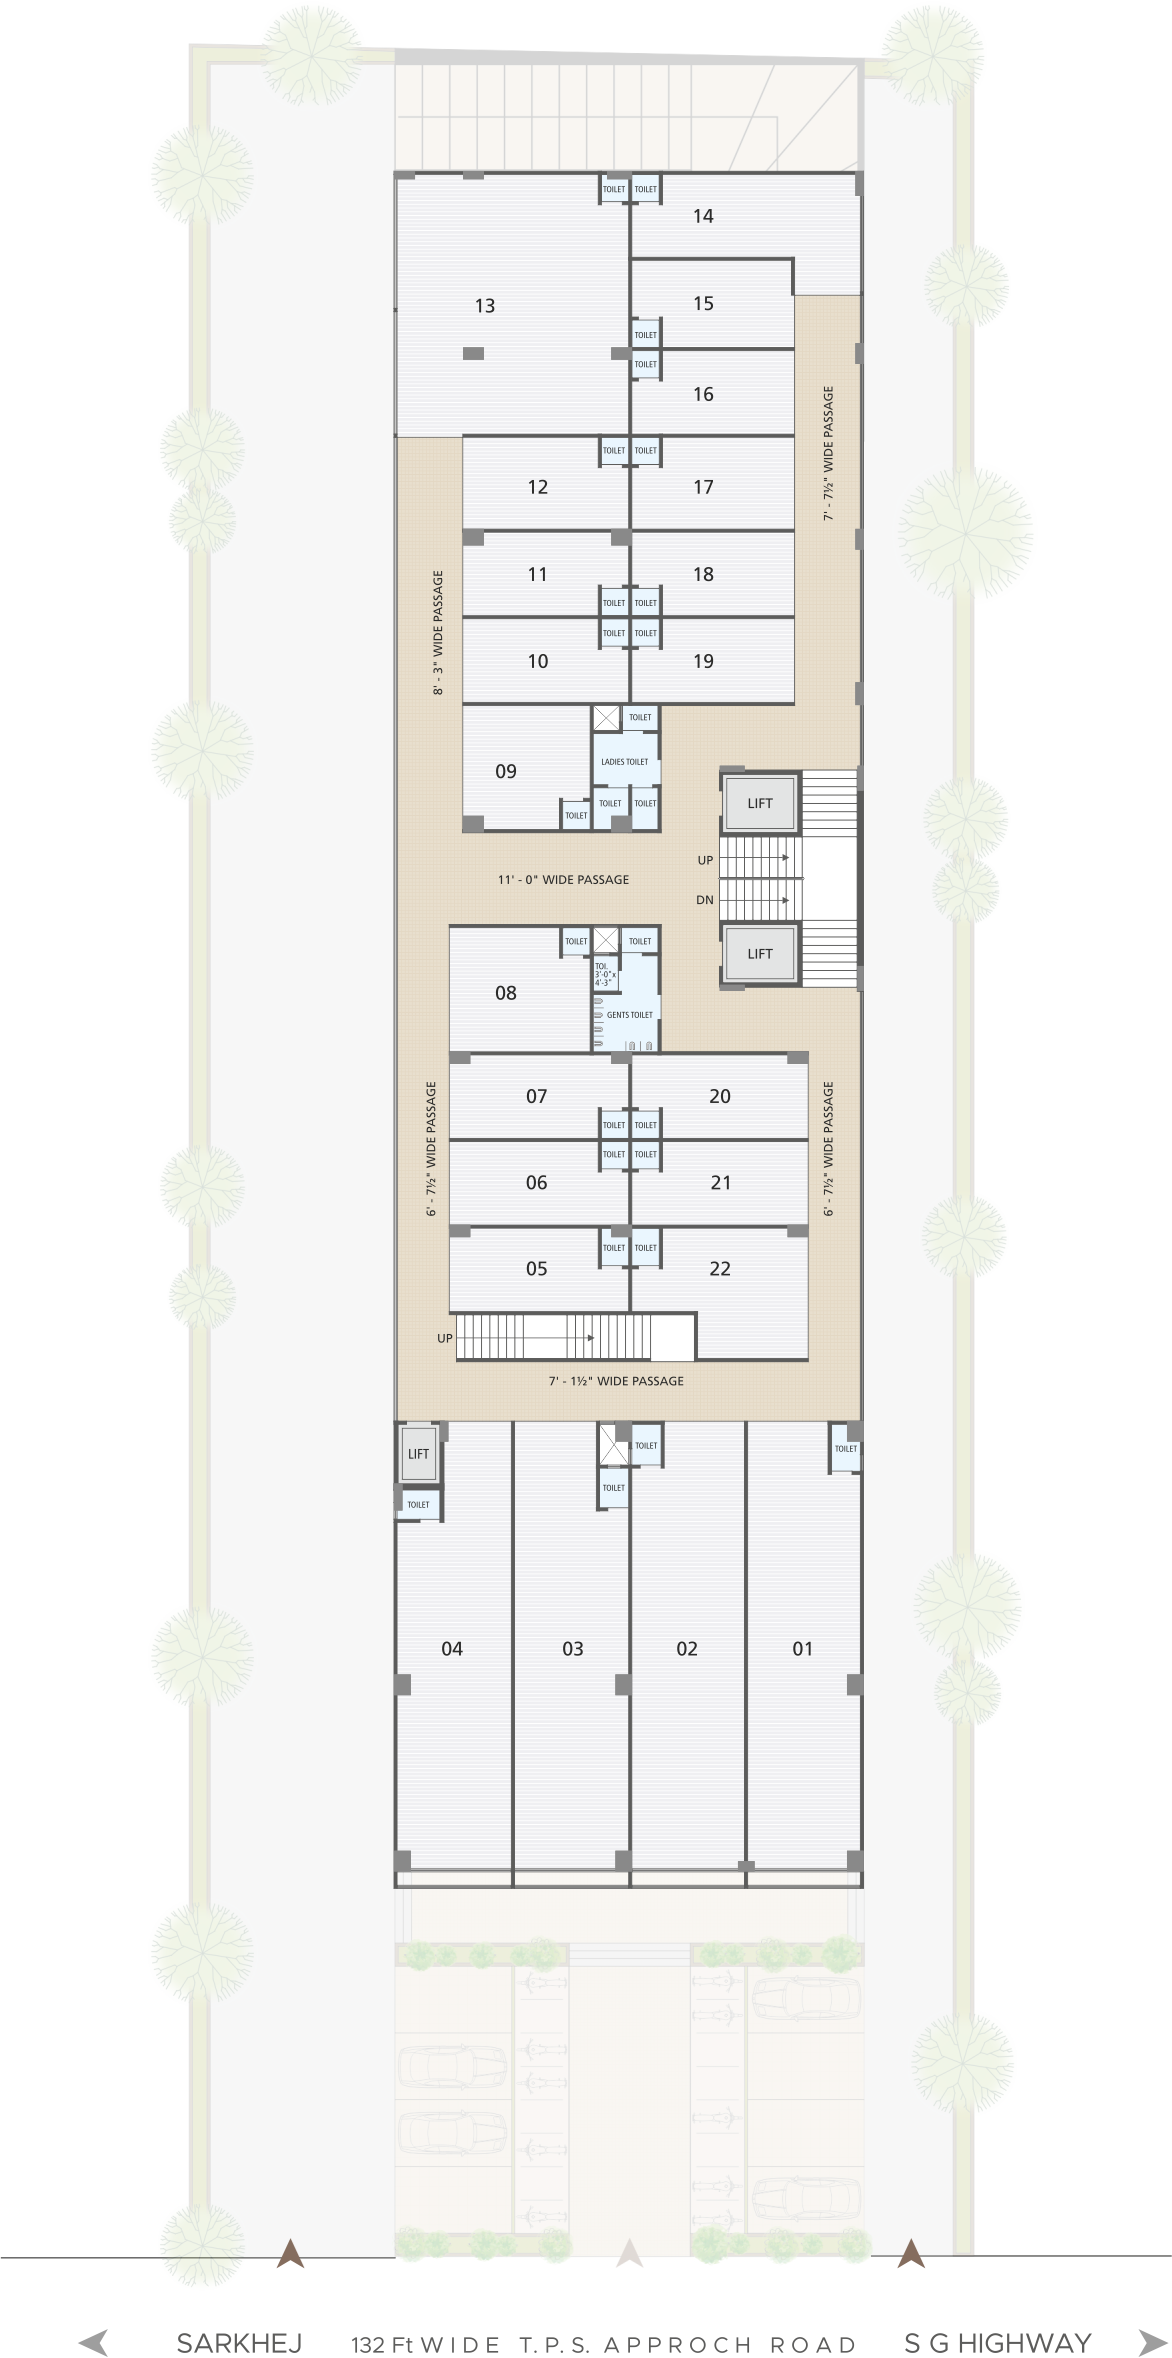 First and second floor floorplan